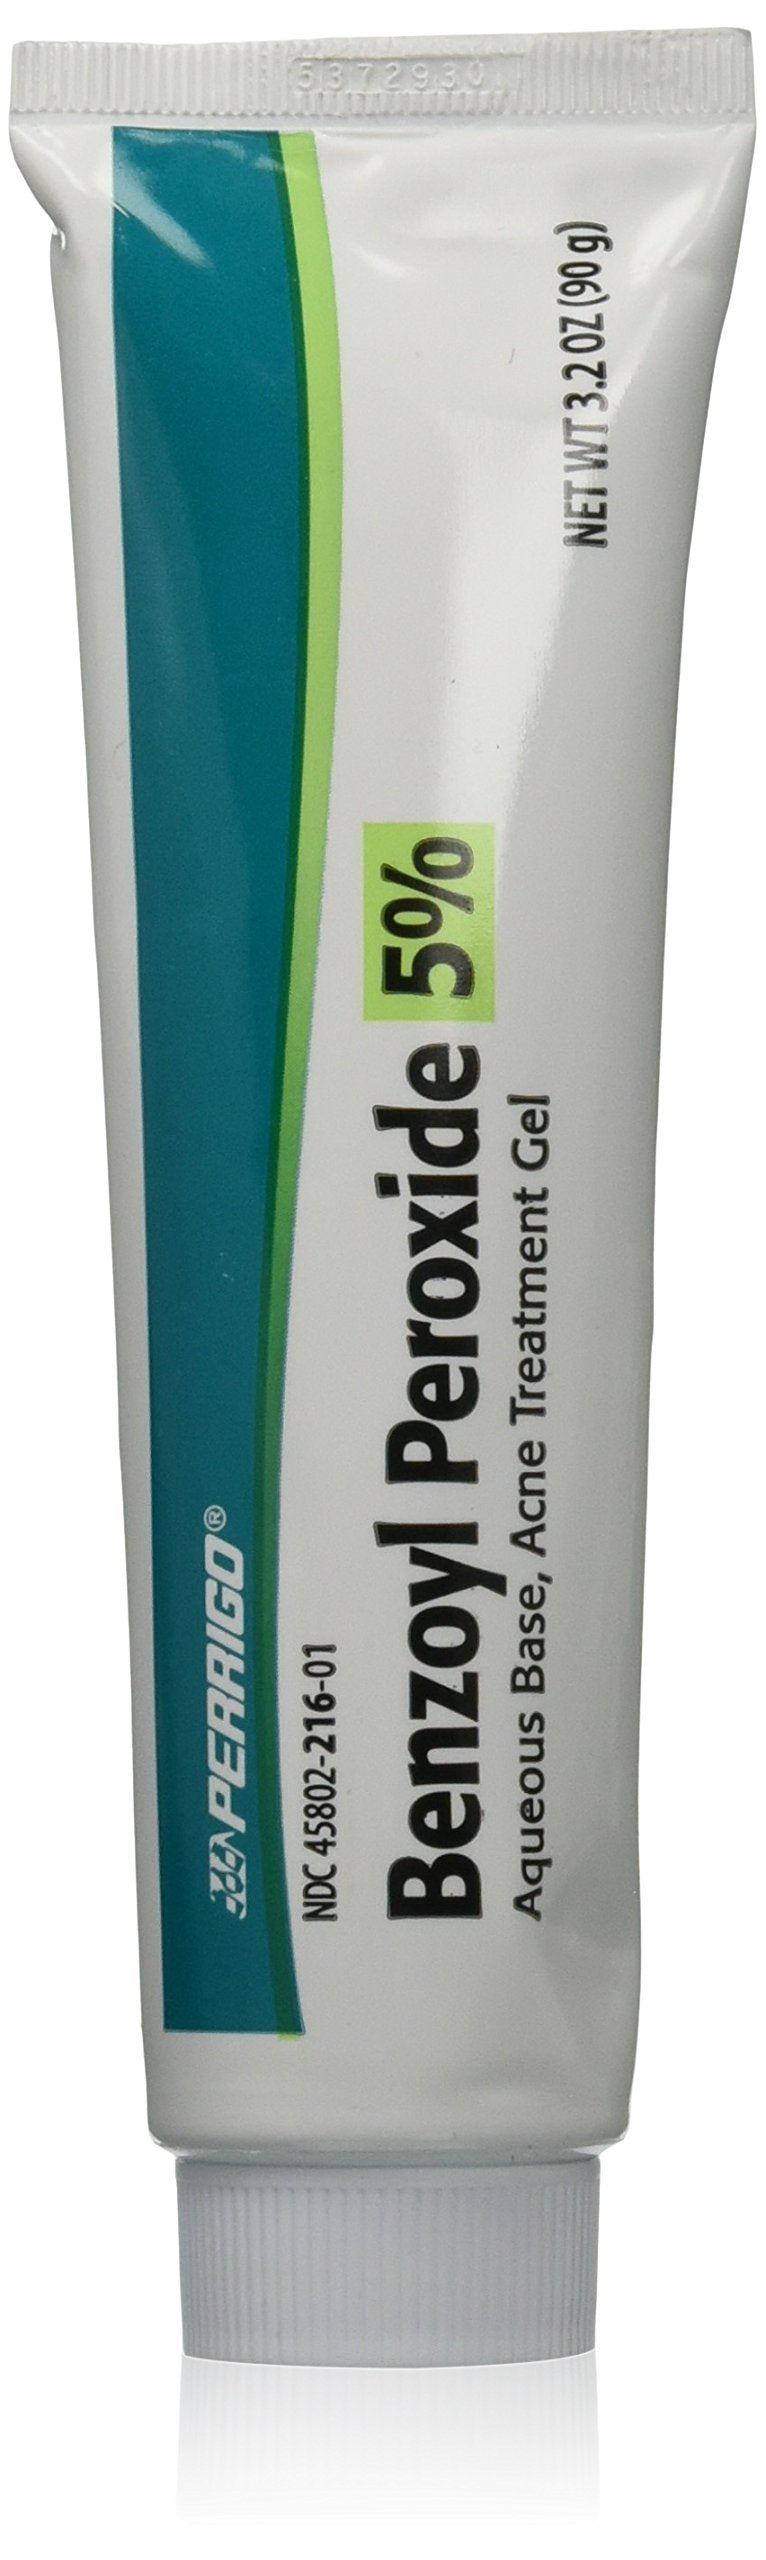 Perrigo Benzoyl Peroxide 5 Percent Large 90 gram Tube of Acne Treatment Gel